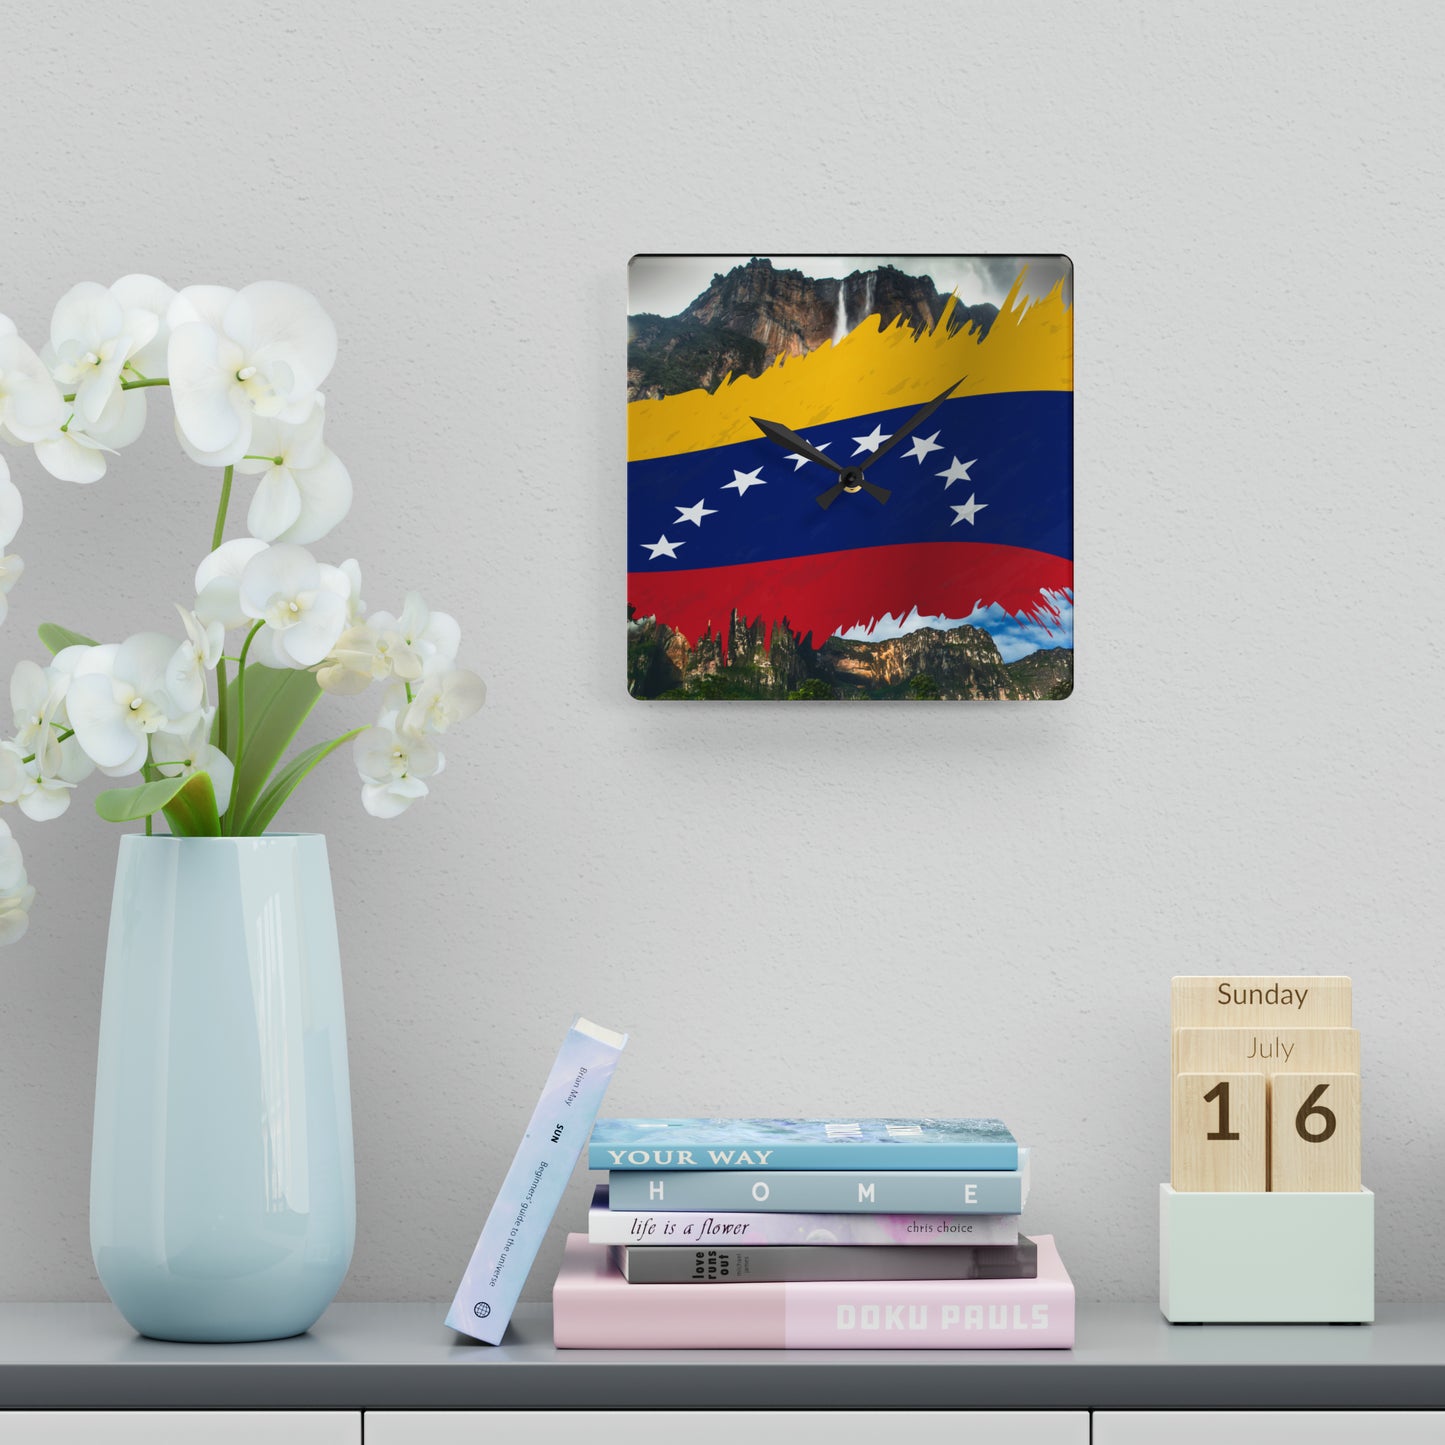 Acrylic Wall Clock - Venezuela's flag